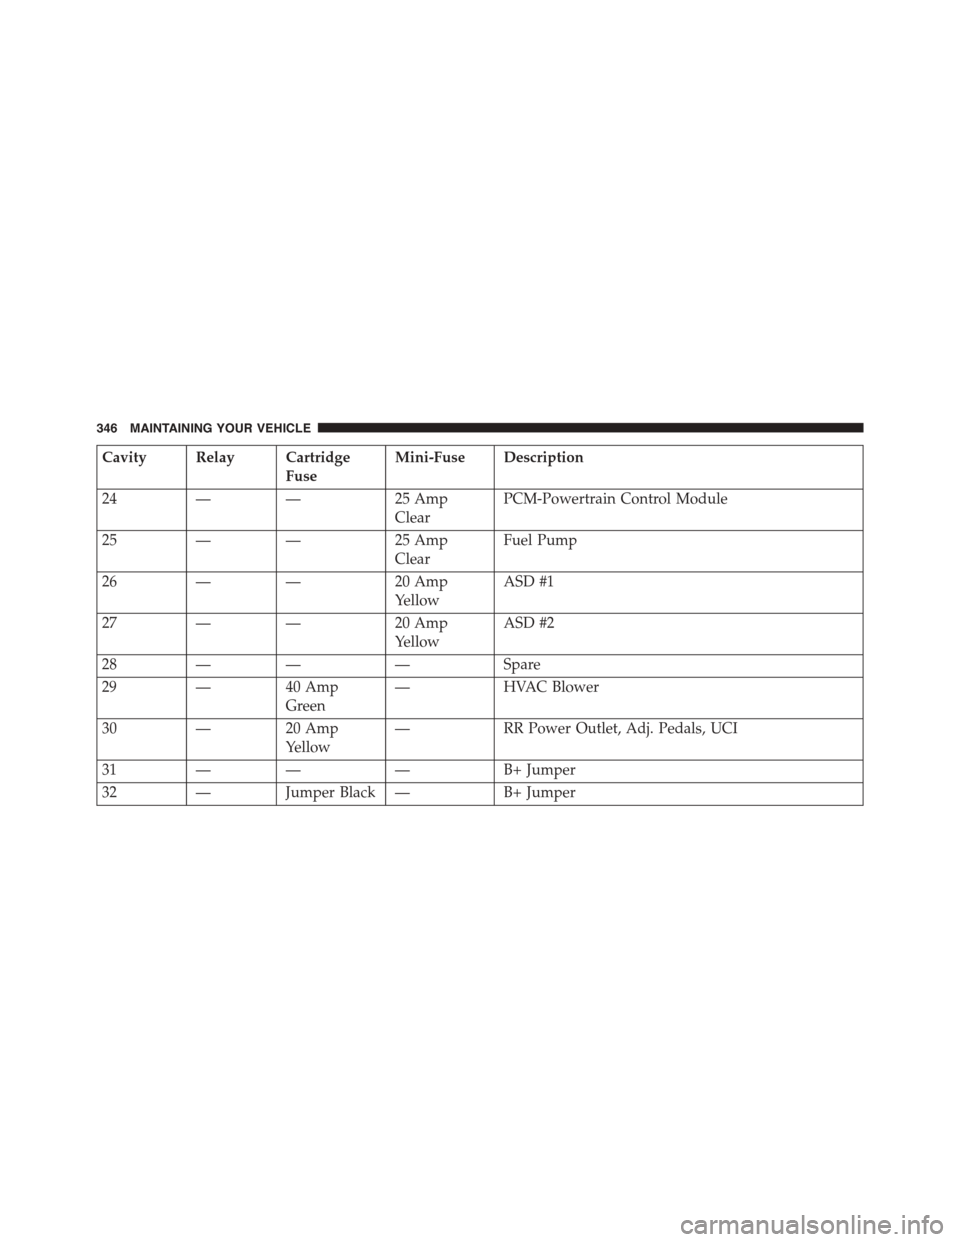 DODGE VIPER 2015 VX / 3.G Owners Manual Cavity Relay Cartridge
Fuse
Mini-Fuse Description
24 — — 25 Amp
Clear
PCM-Powertrain Control Module
25 — — 25 Amp
Clear
Fuel Pump
26 — — 20 Amp
Yellow
ASD #1
27 — — 20 Amp
Yellow
ASD #